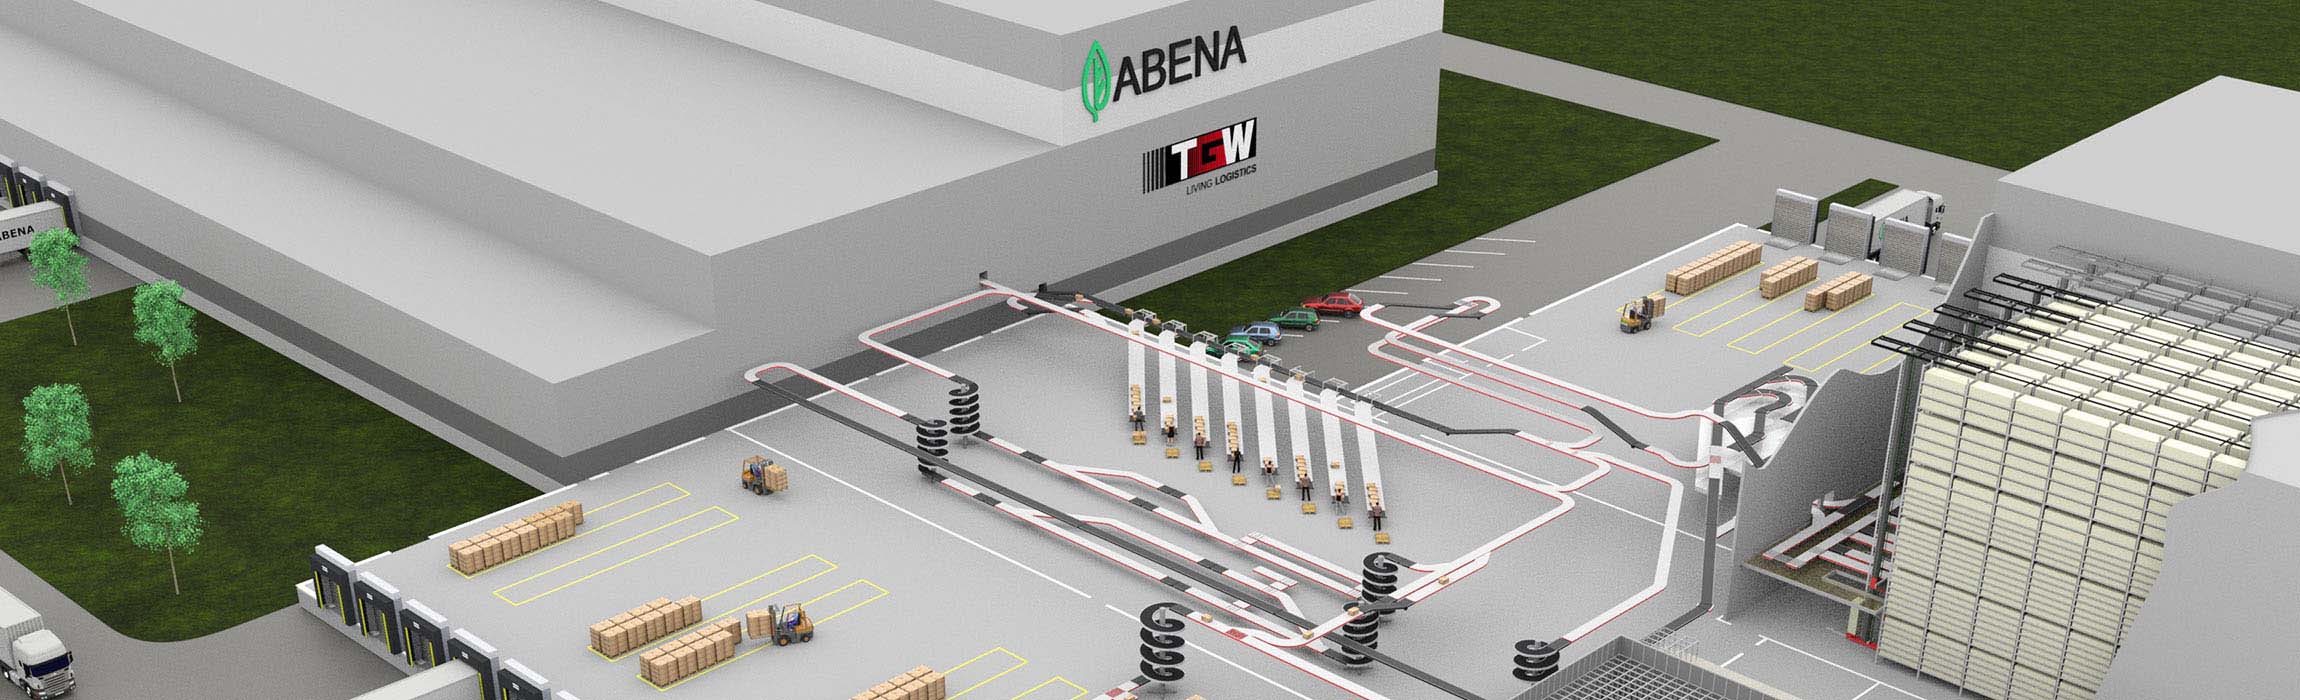 Abena expands its logistics centre with energy-efficient TGW conveyor network